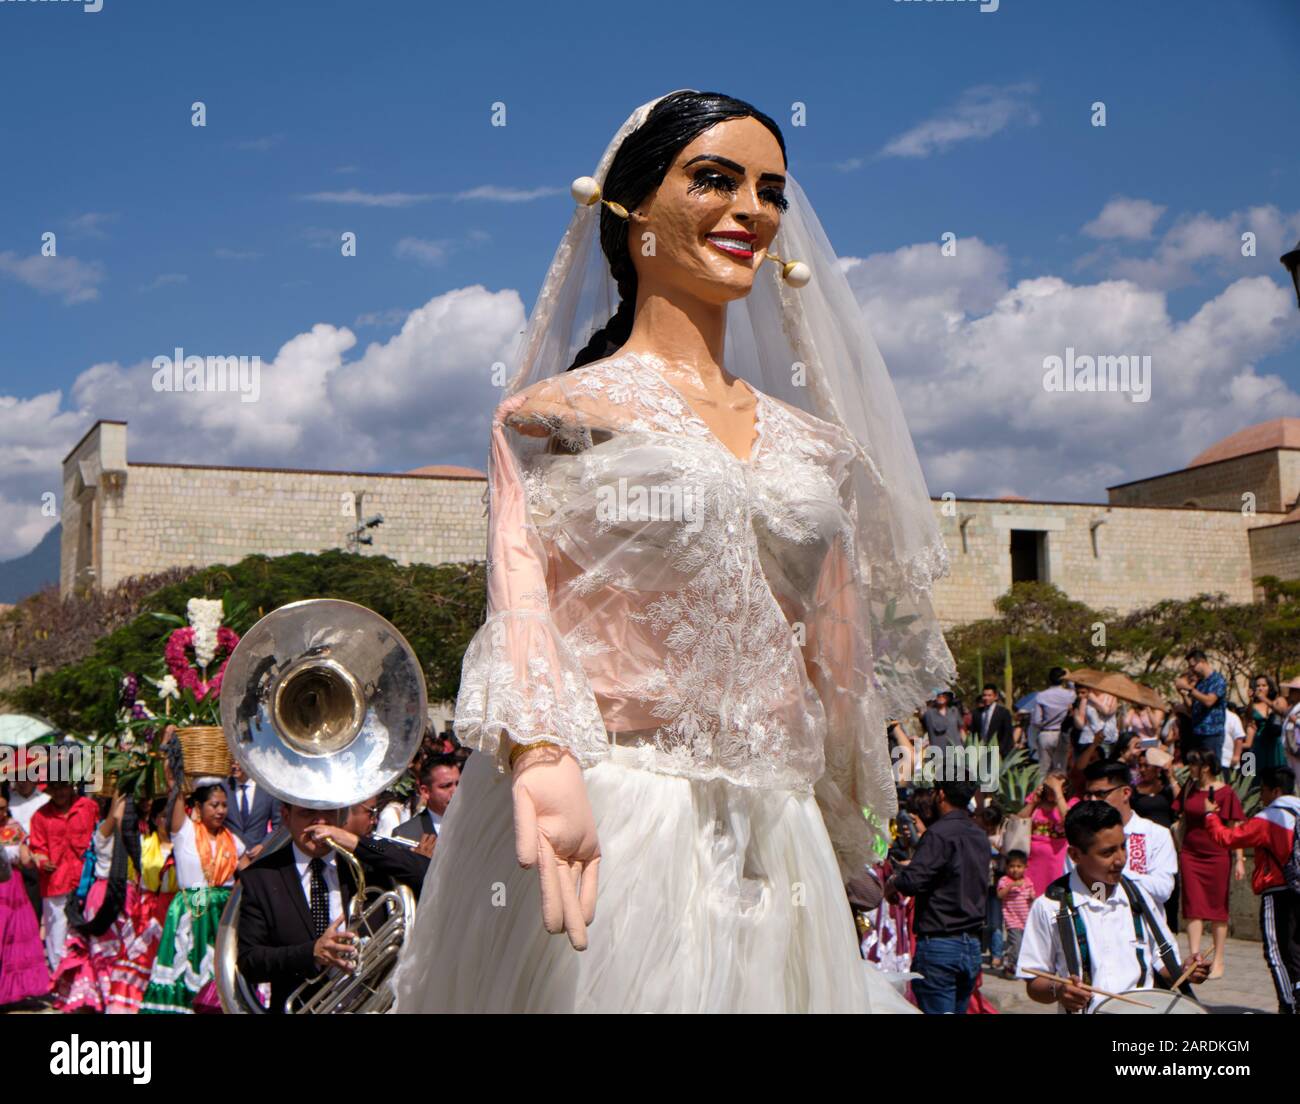 Giant puppet of the Bride Part of Traditional wedding parade (Calenda de Bodas) on the streets of Oaxaca. Stock Photo